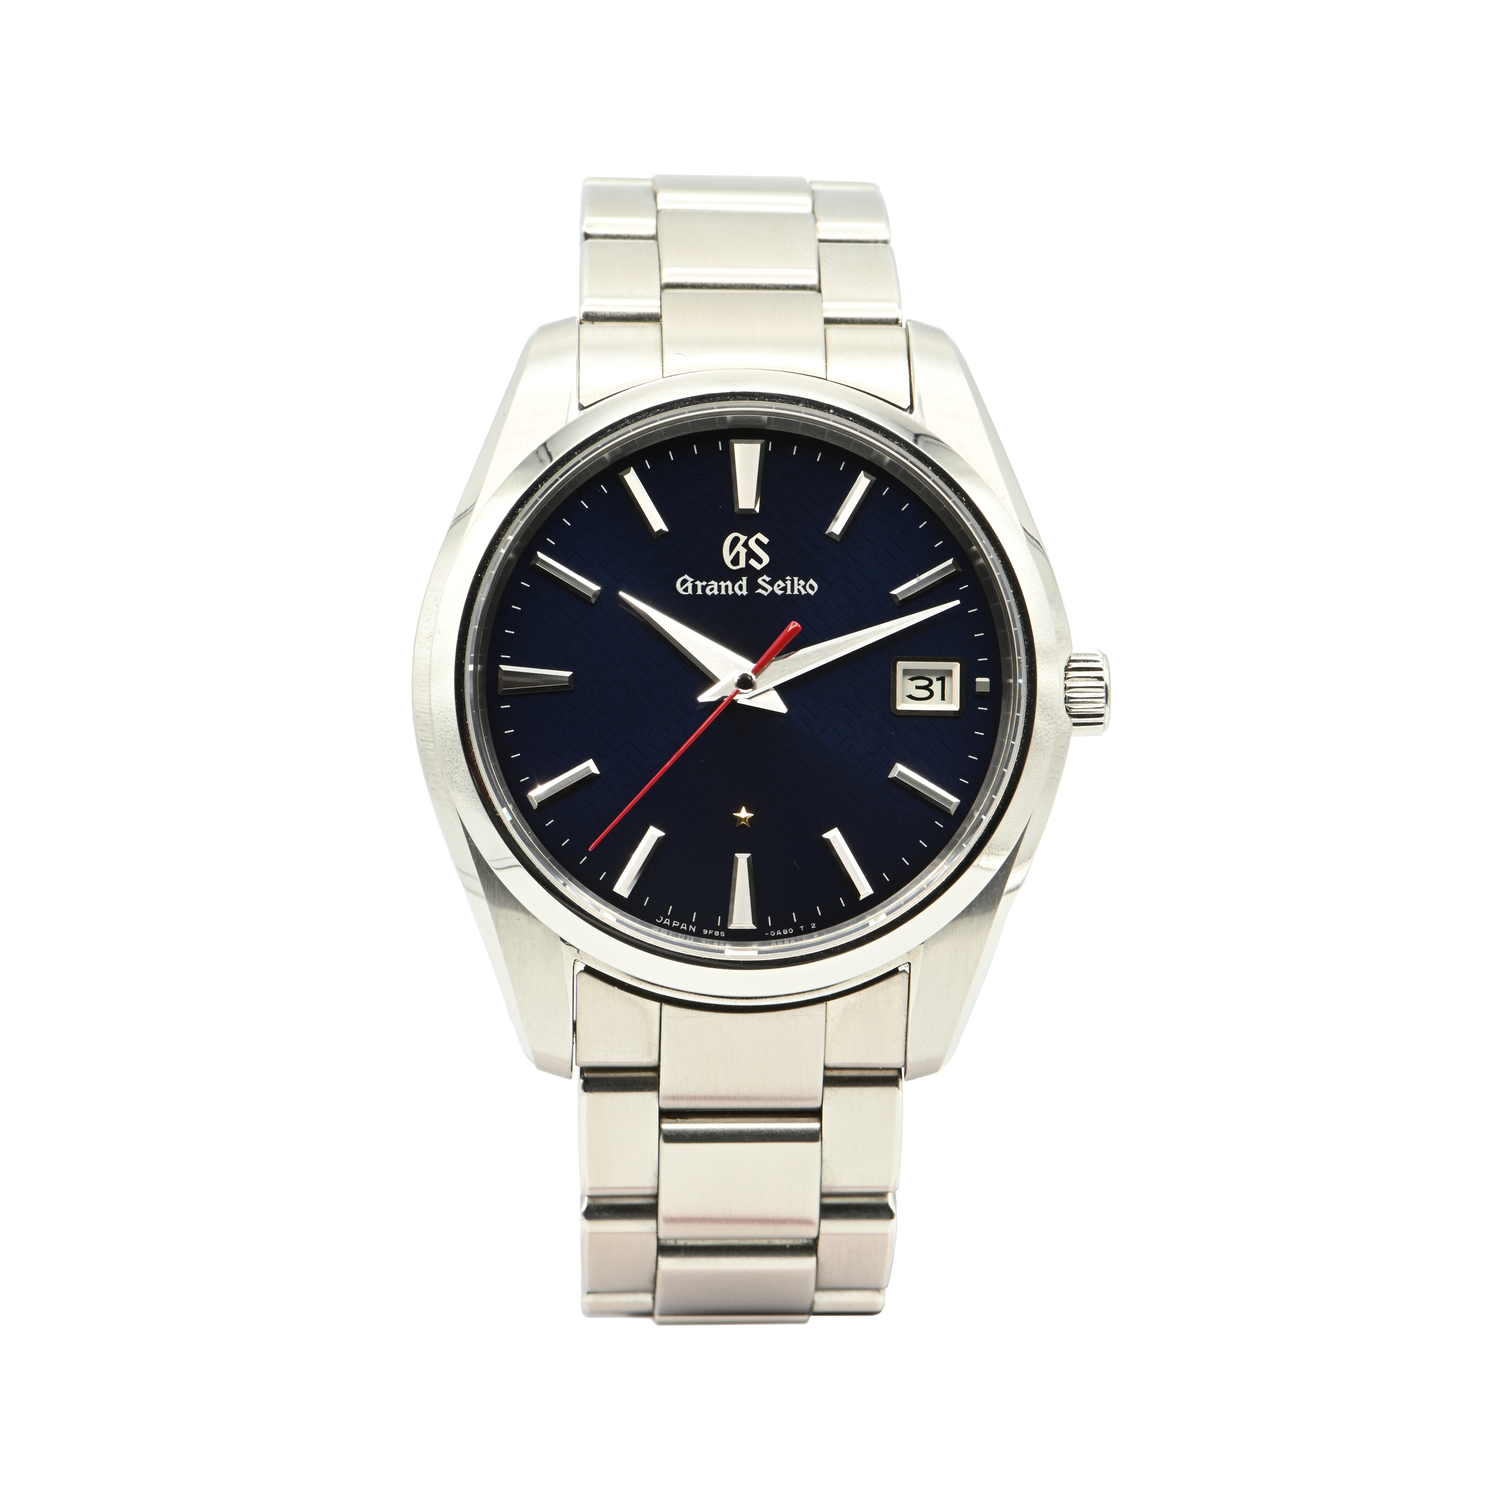 Previously Owned - Grand Seiko SBGP007 60th Anniversary Quartz Timepiece —  Windsor Time